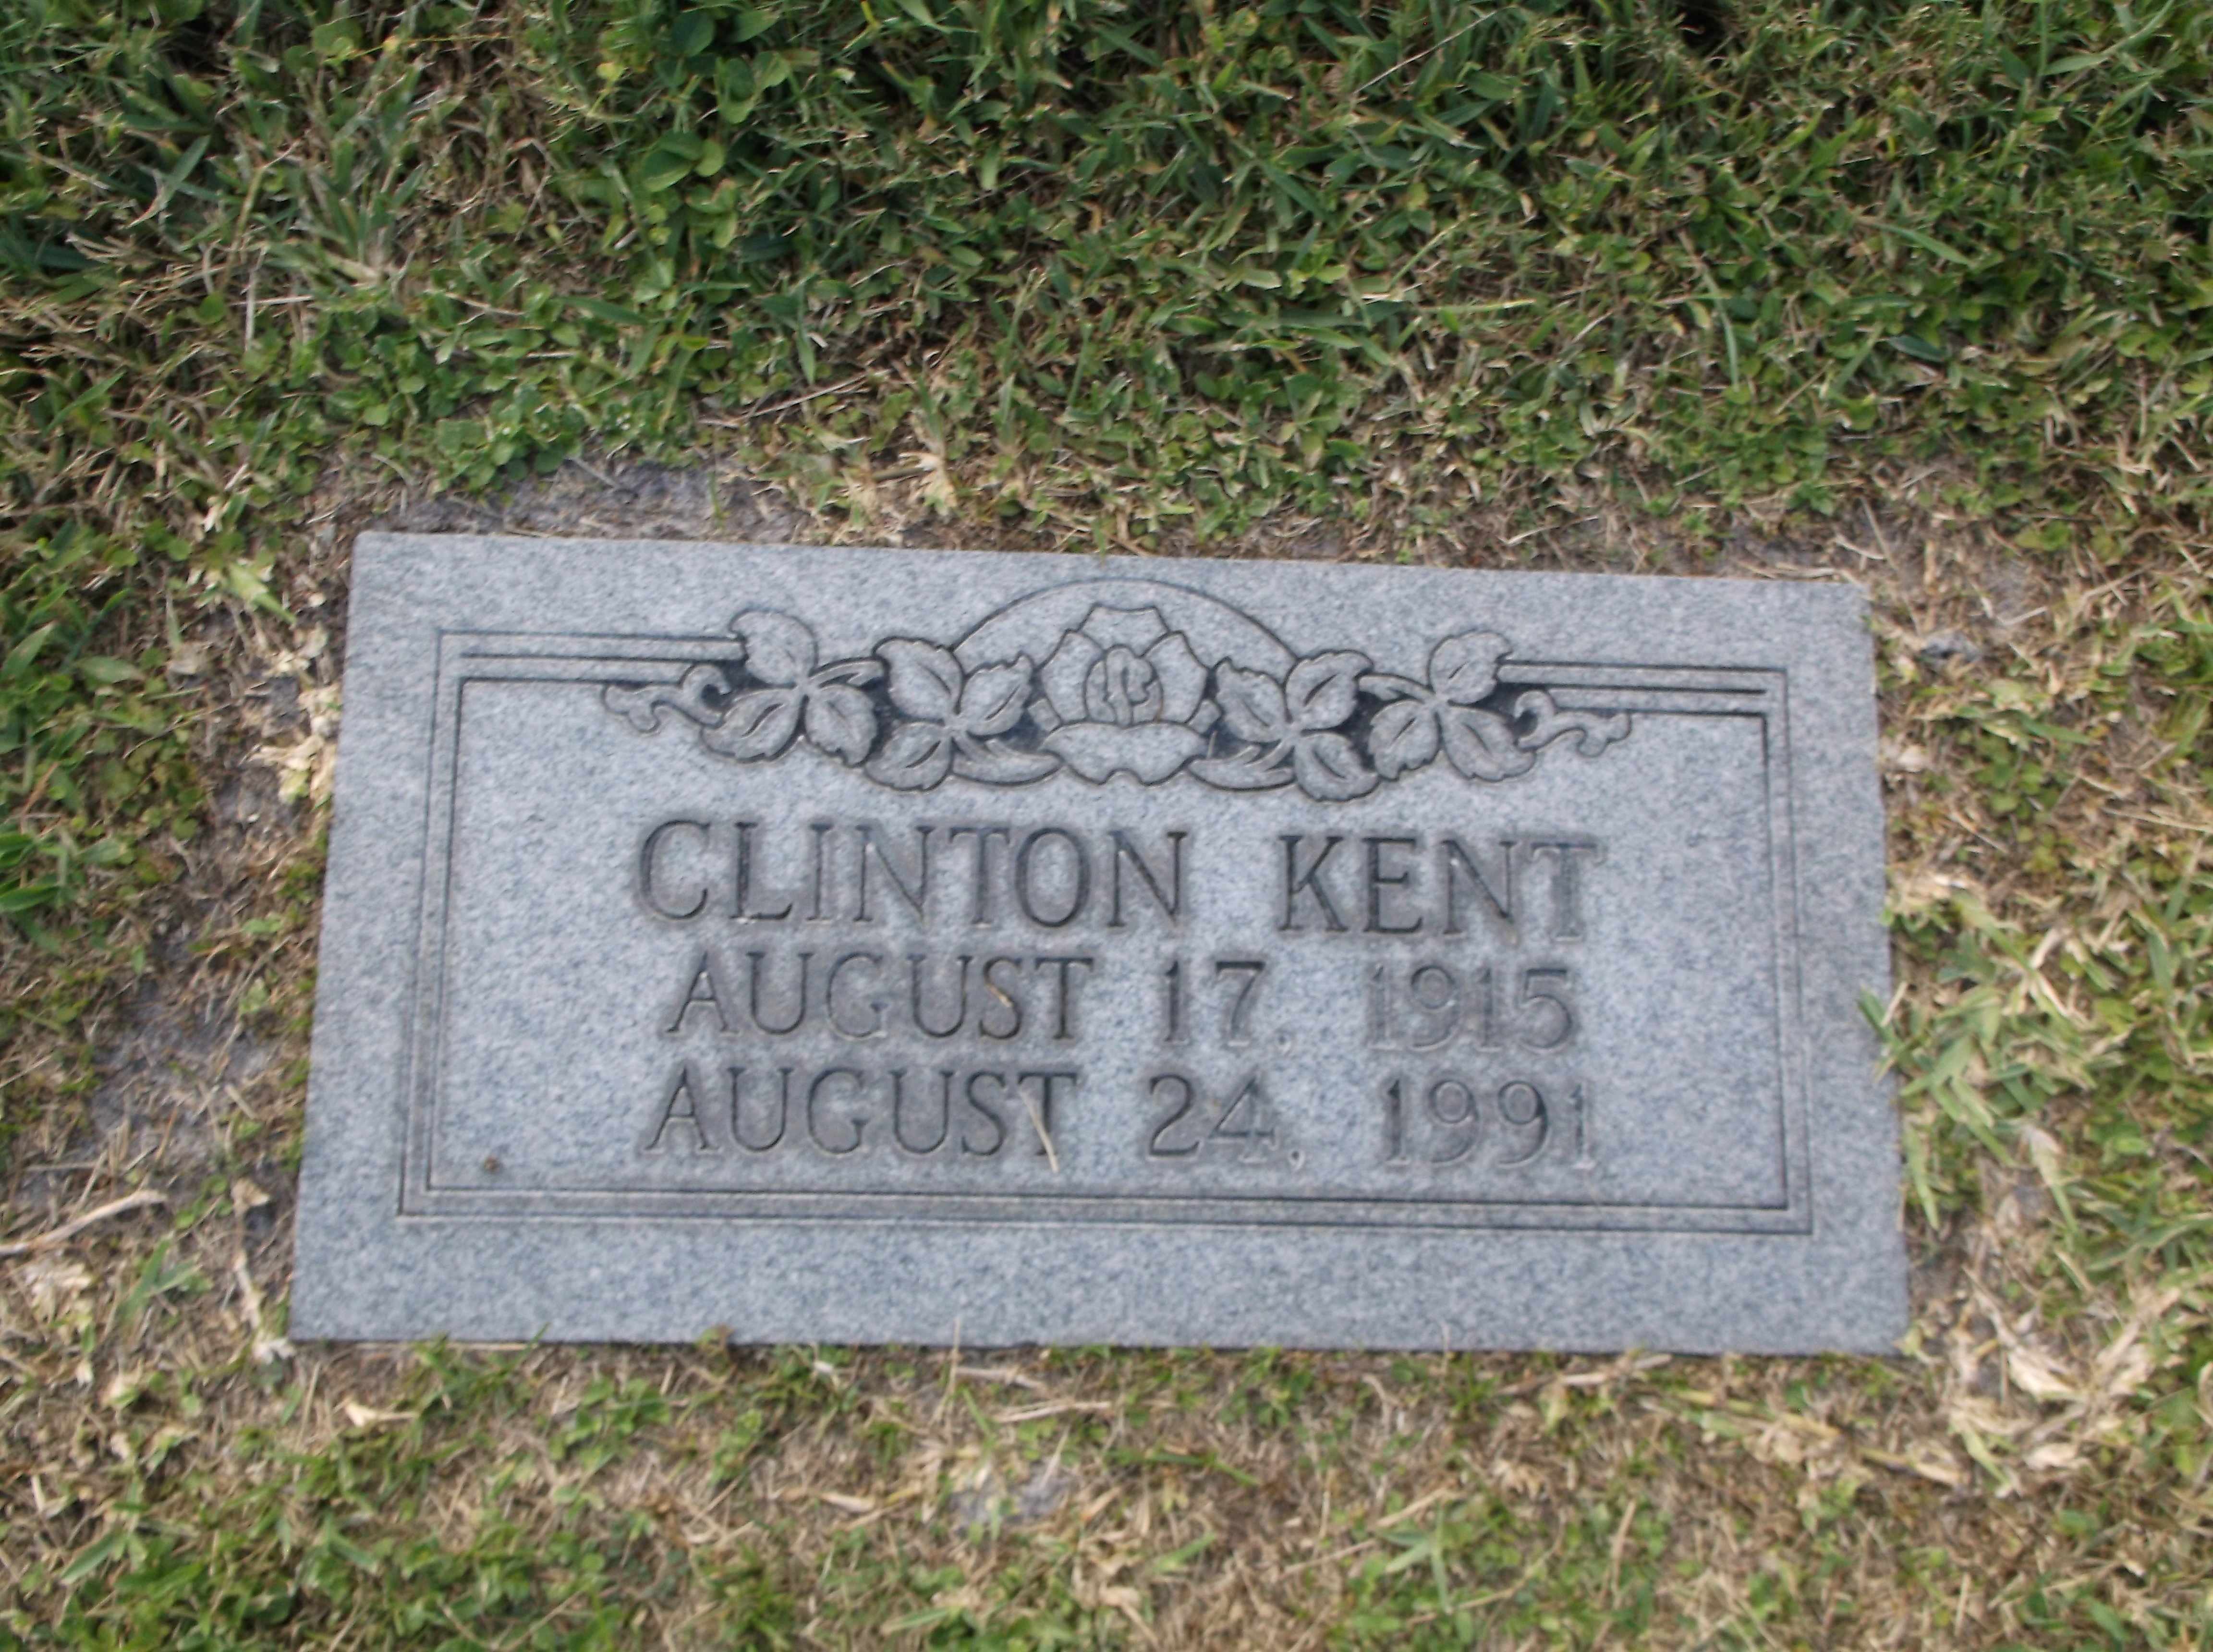 Clinton Kent